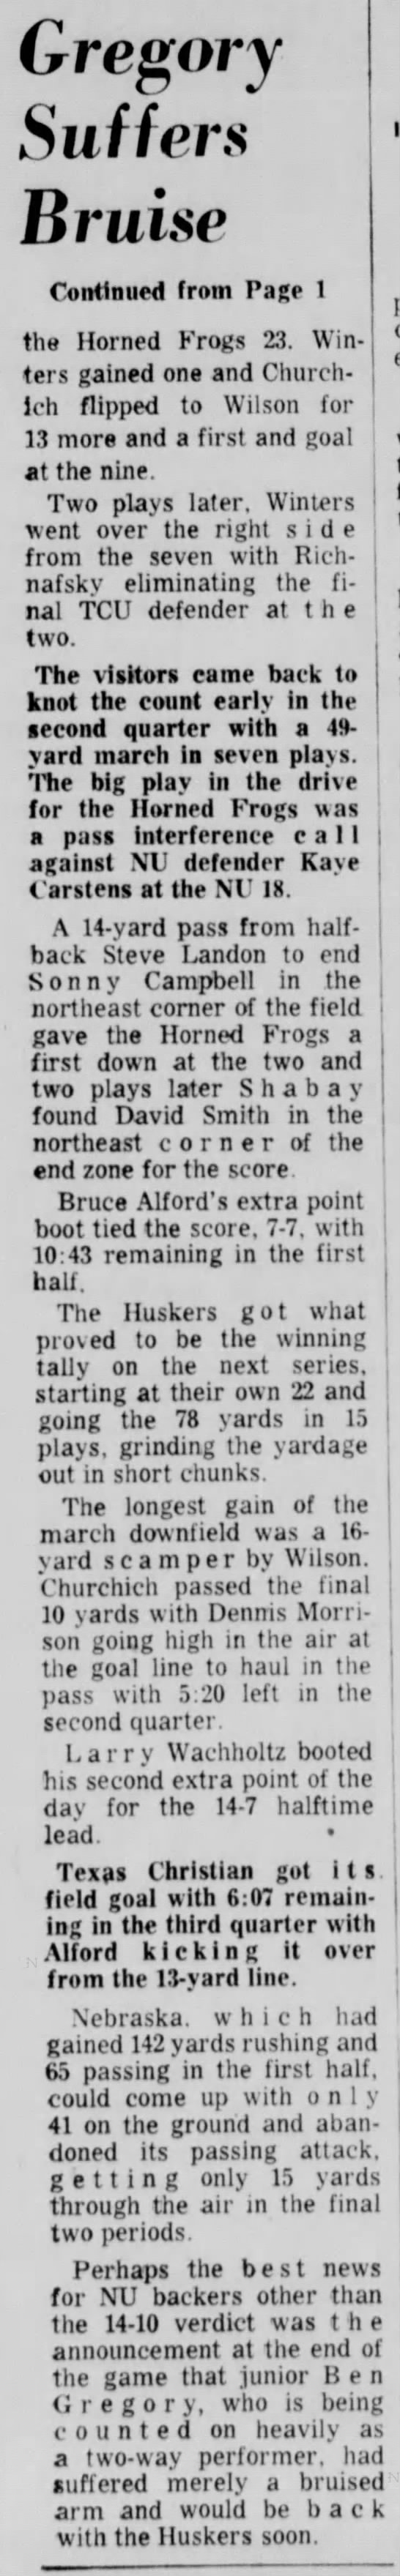 1966 TCU-Nebraska football part 2 - 